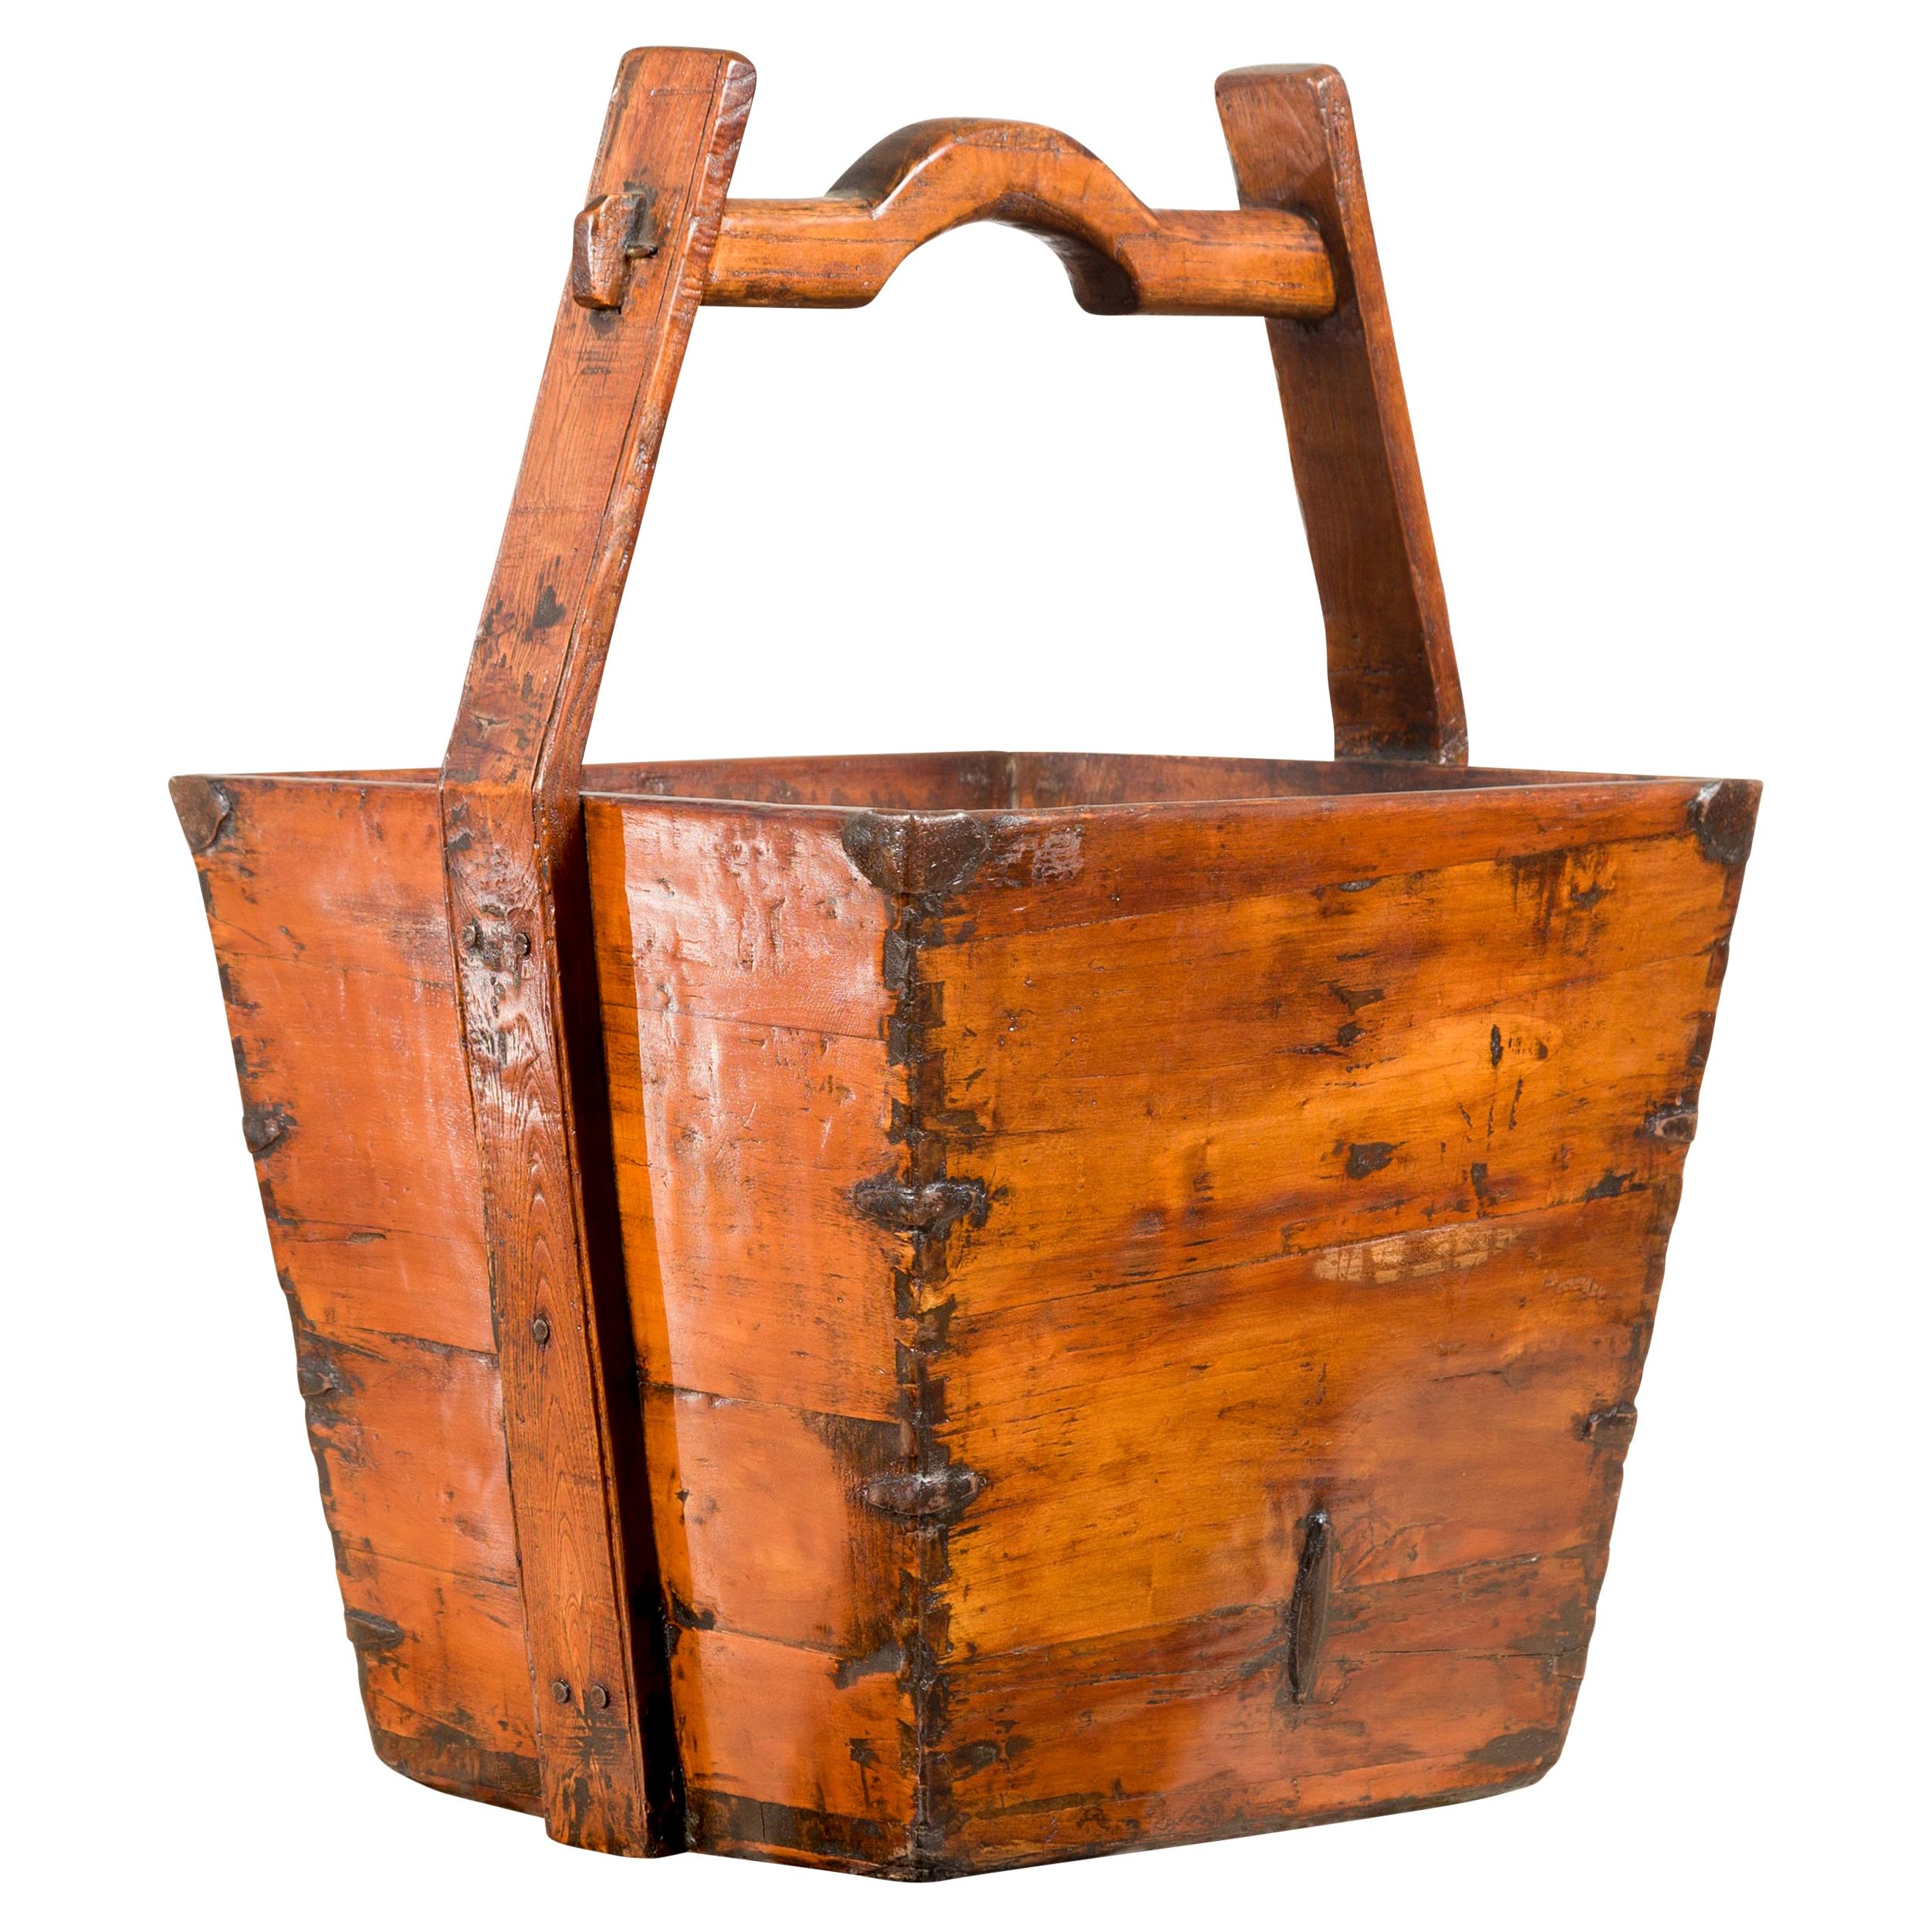 Vintage Chinese Midcentury Wood Grain Basket with Large Handle and Metal Braces